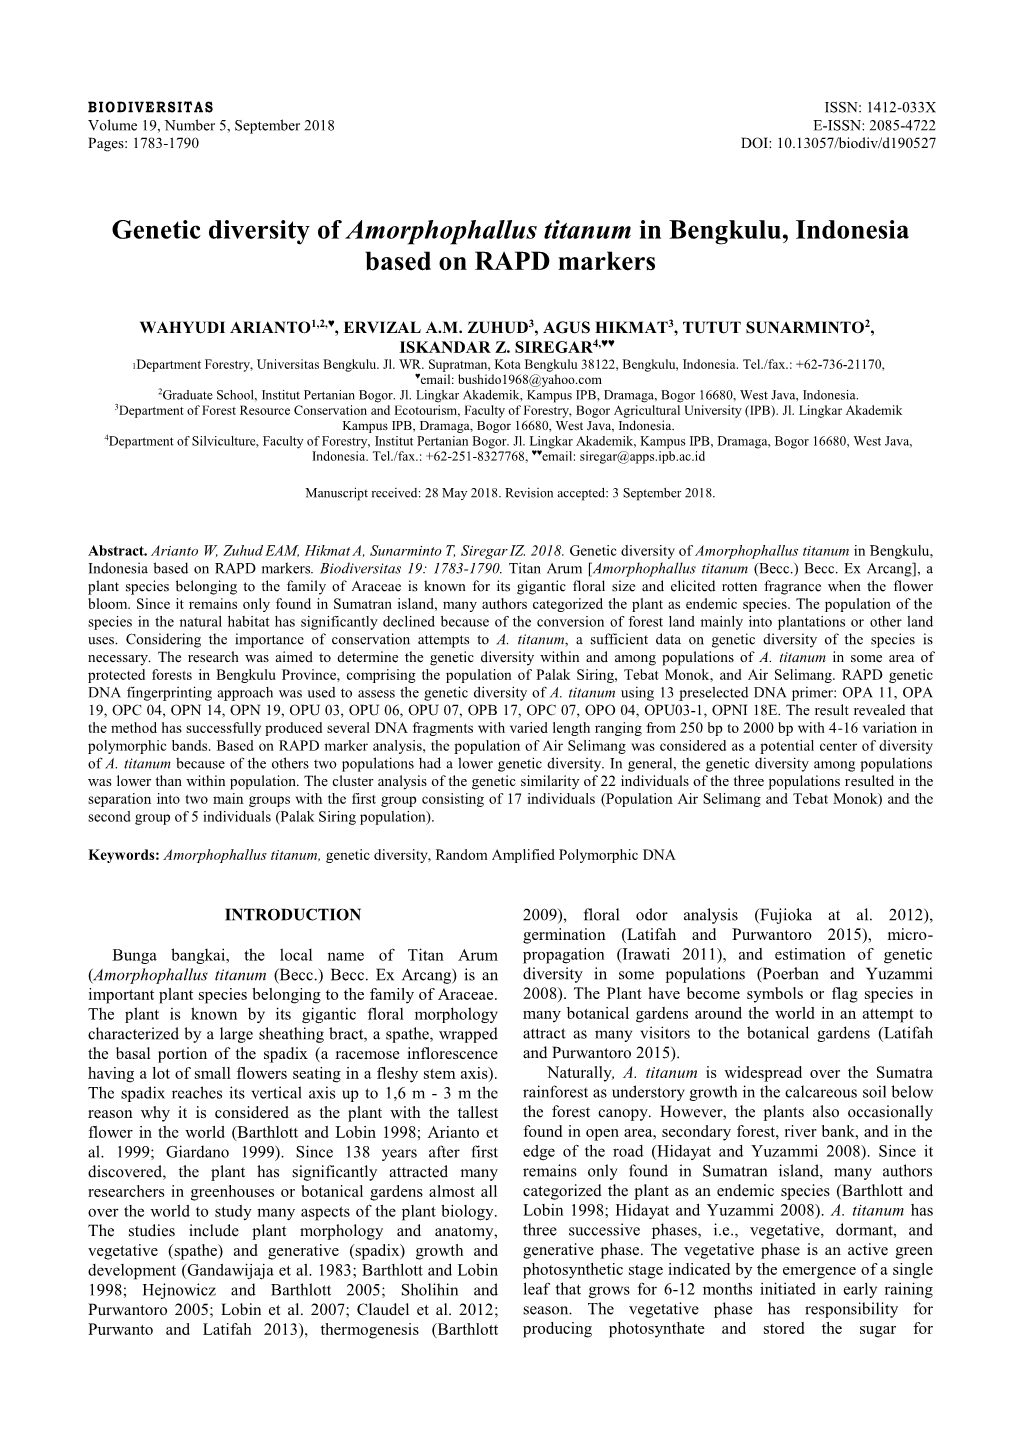 Genetic Diversity of Amorphophallus Titanum in Bengkulu, Indonesia Based on RAPD Markers